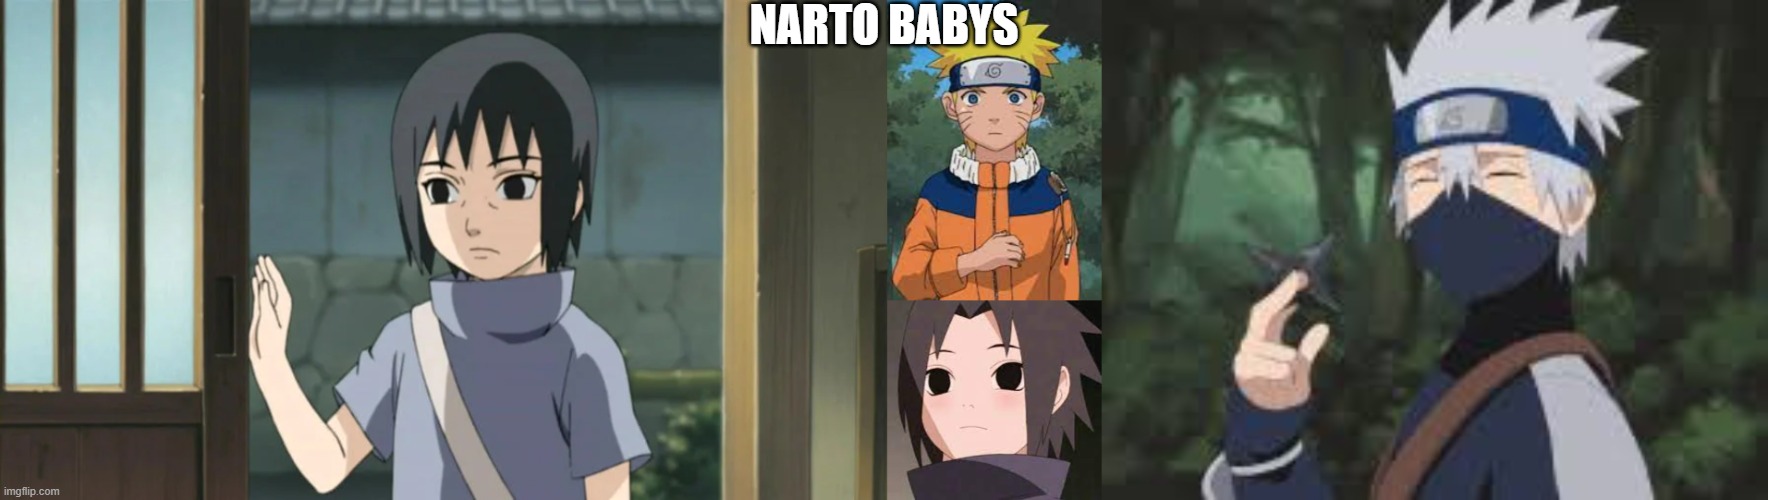 cute narto babys | NARTO BABYS | made w/ Imgflip meme maker